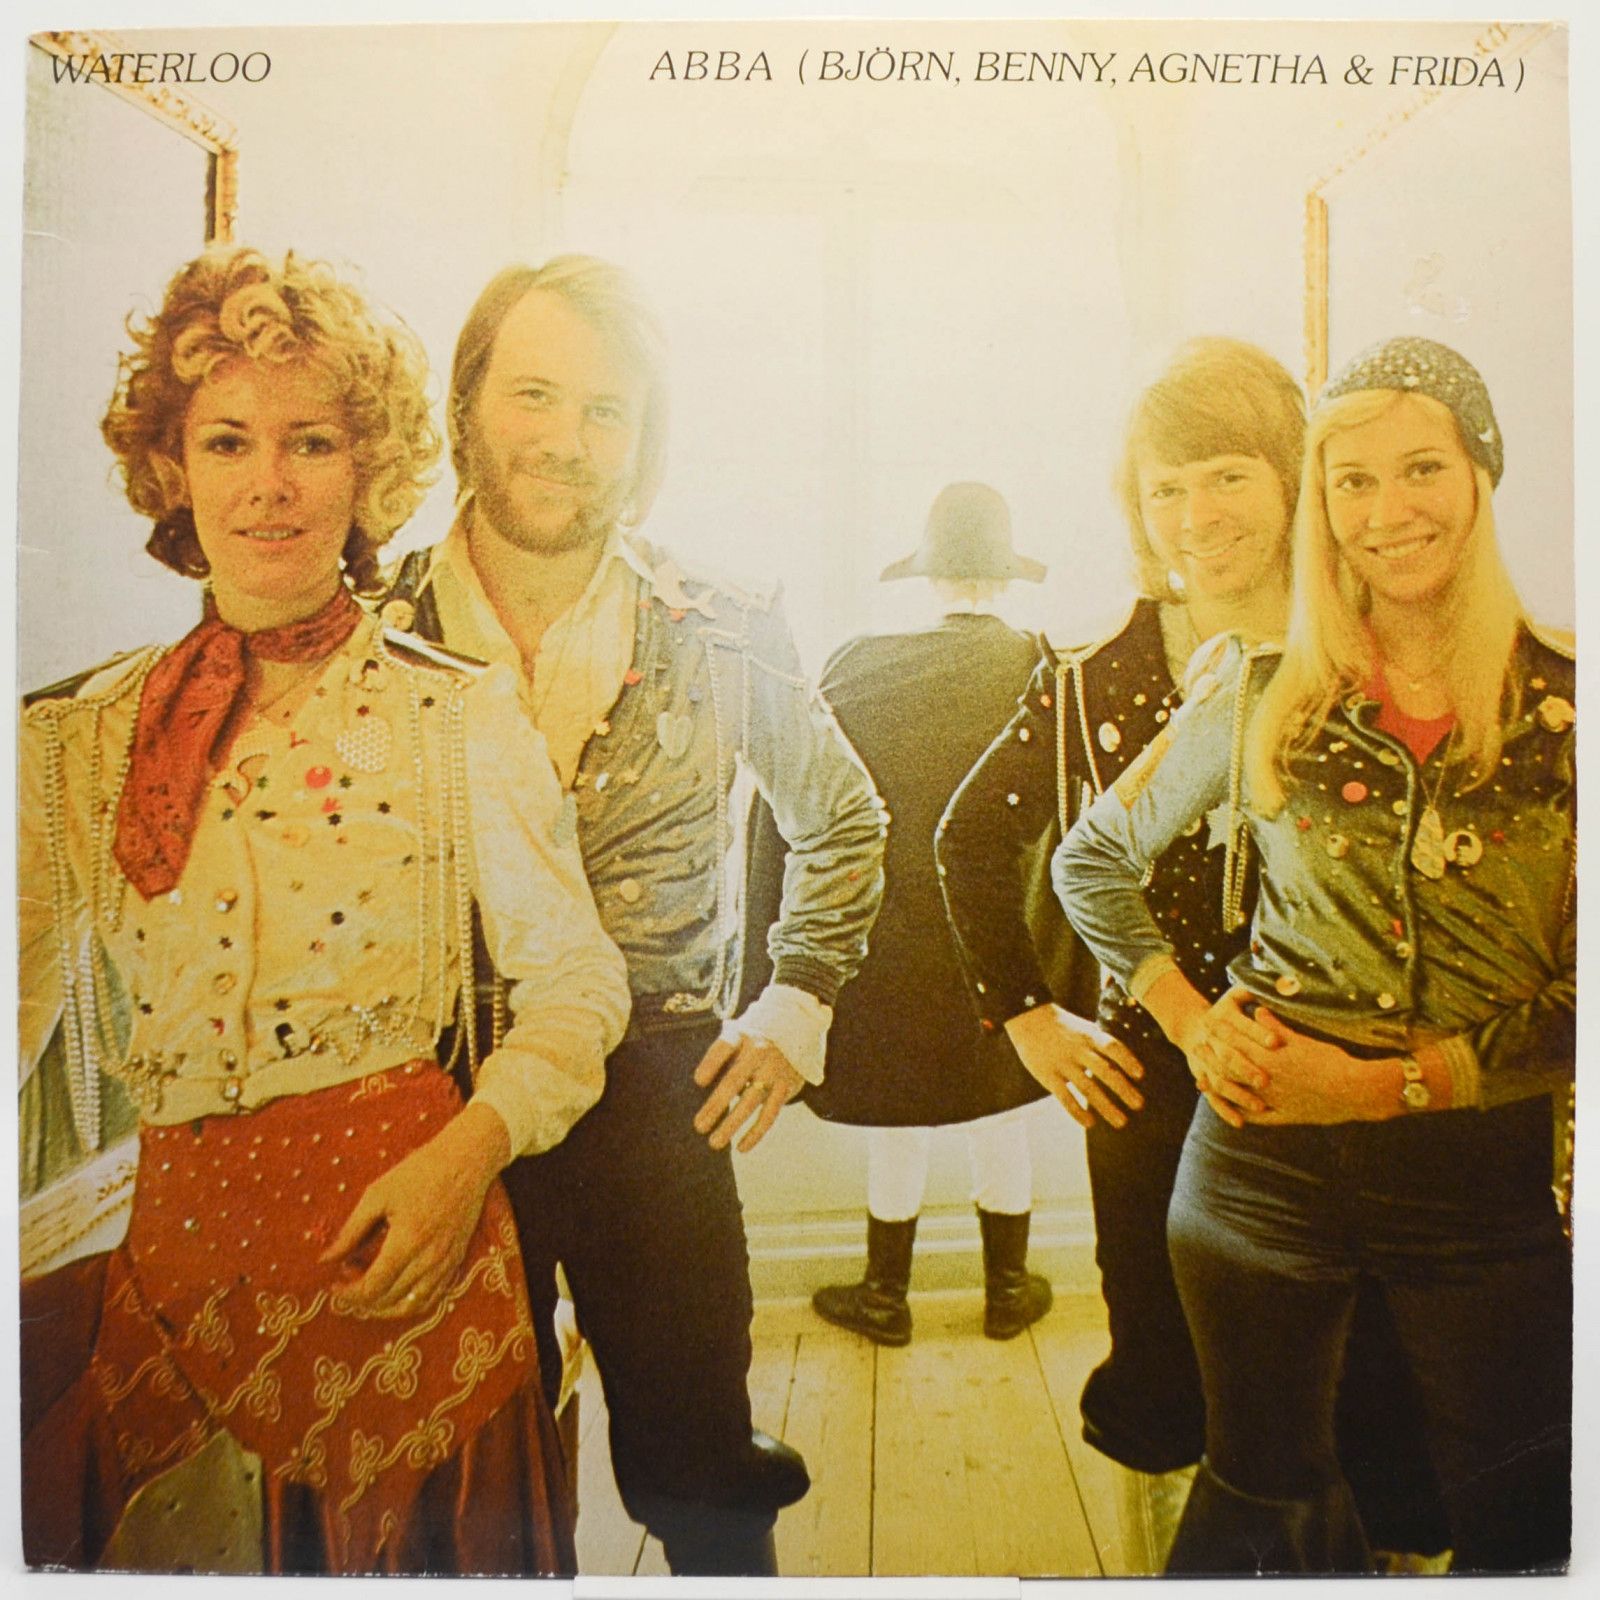 ABBA, Björn, Benny, Agnetha & Frida — Waterloo (Sweden), 1974